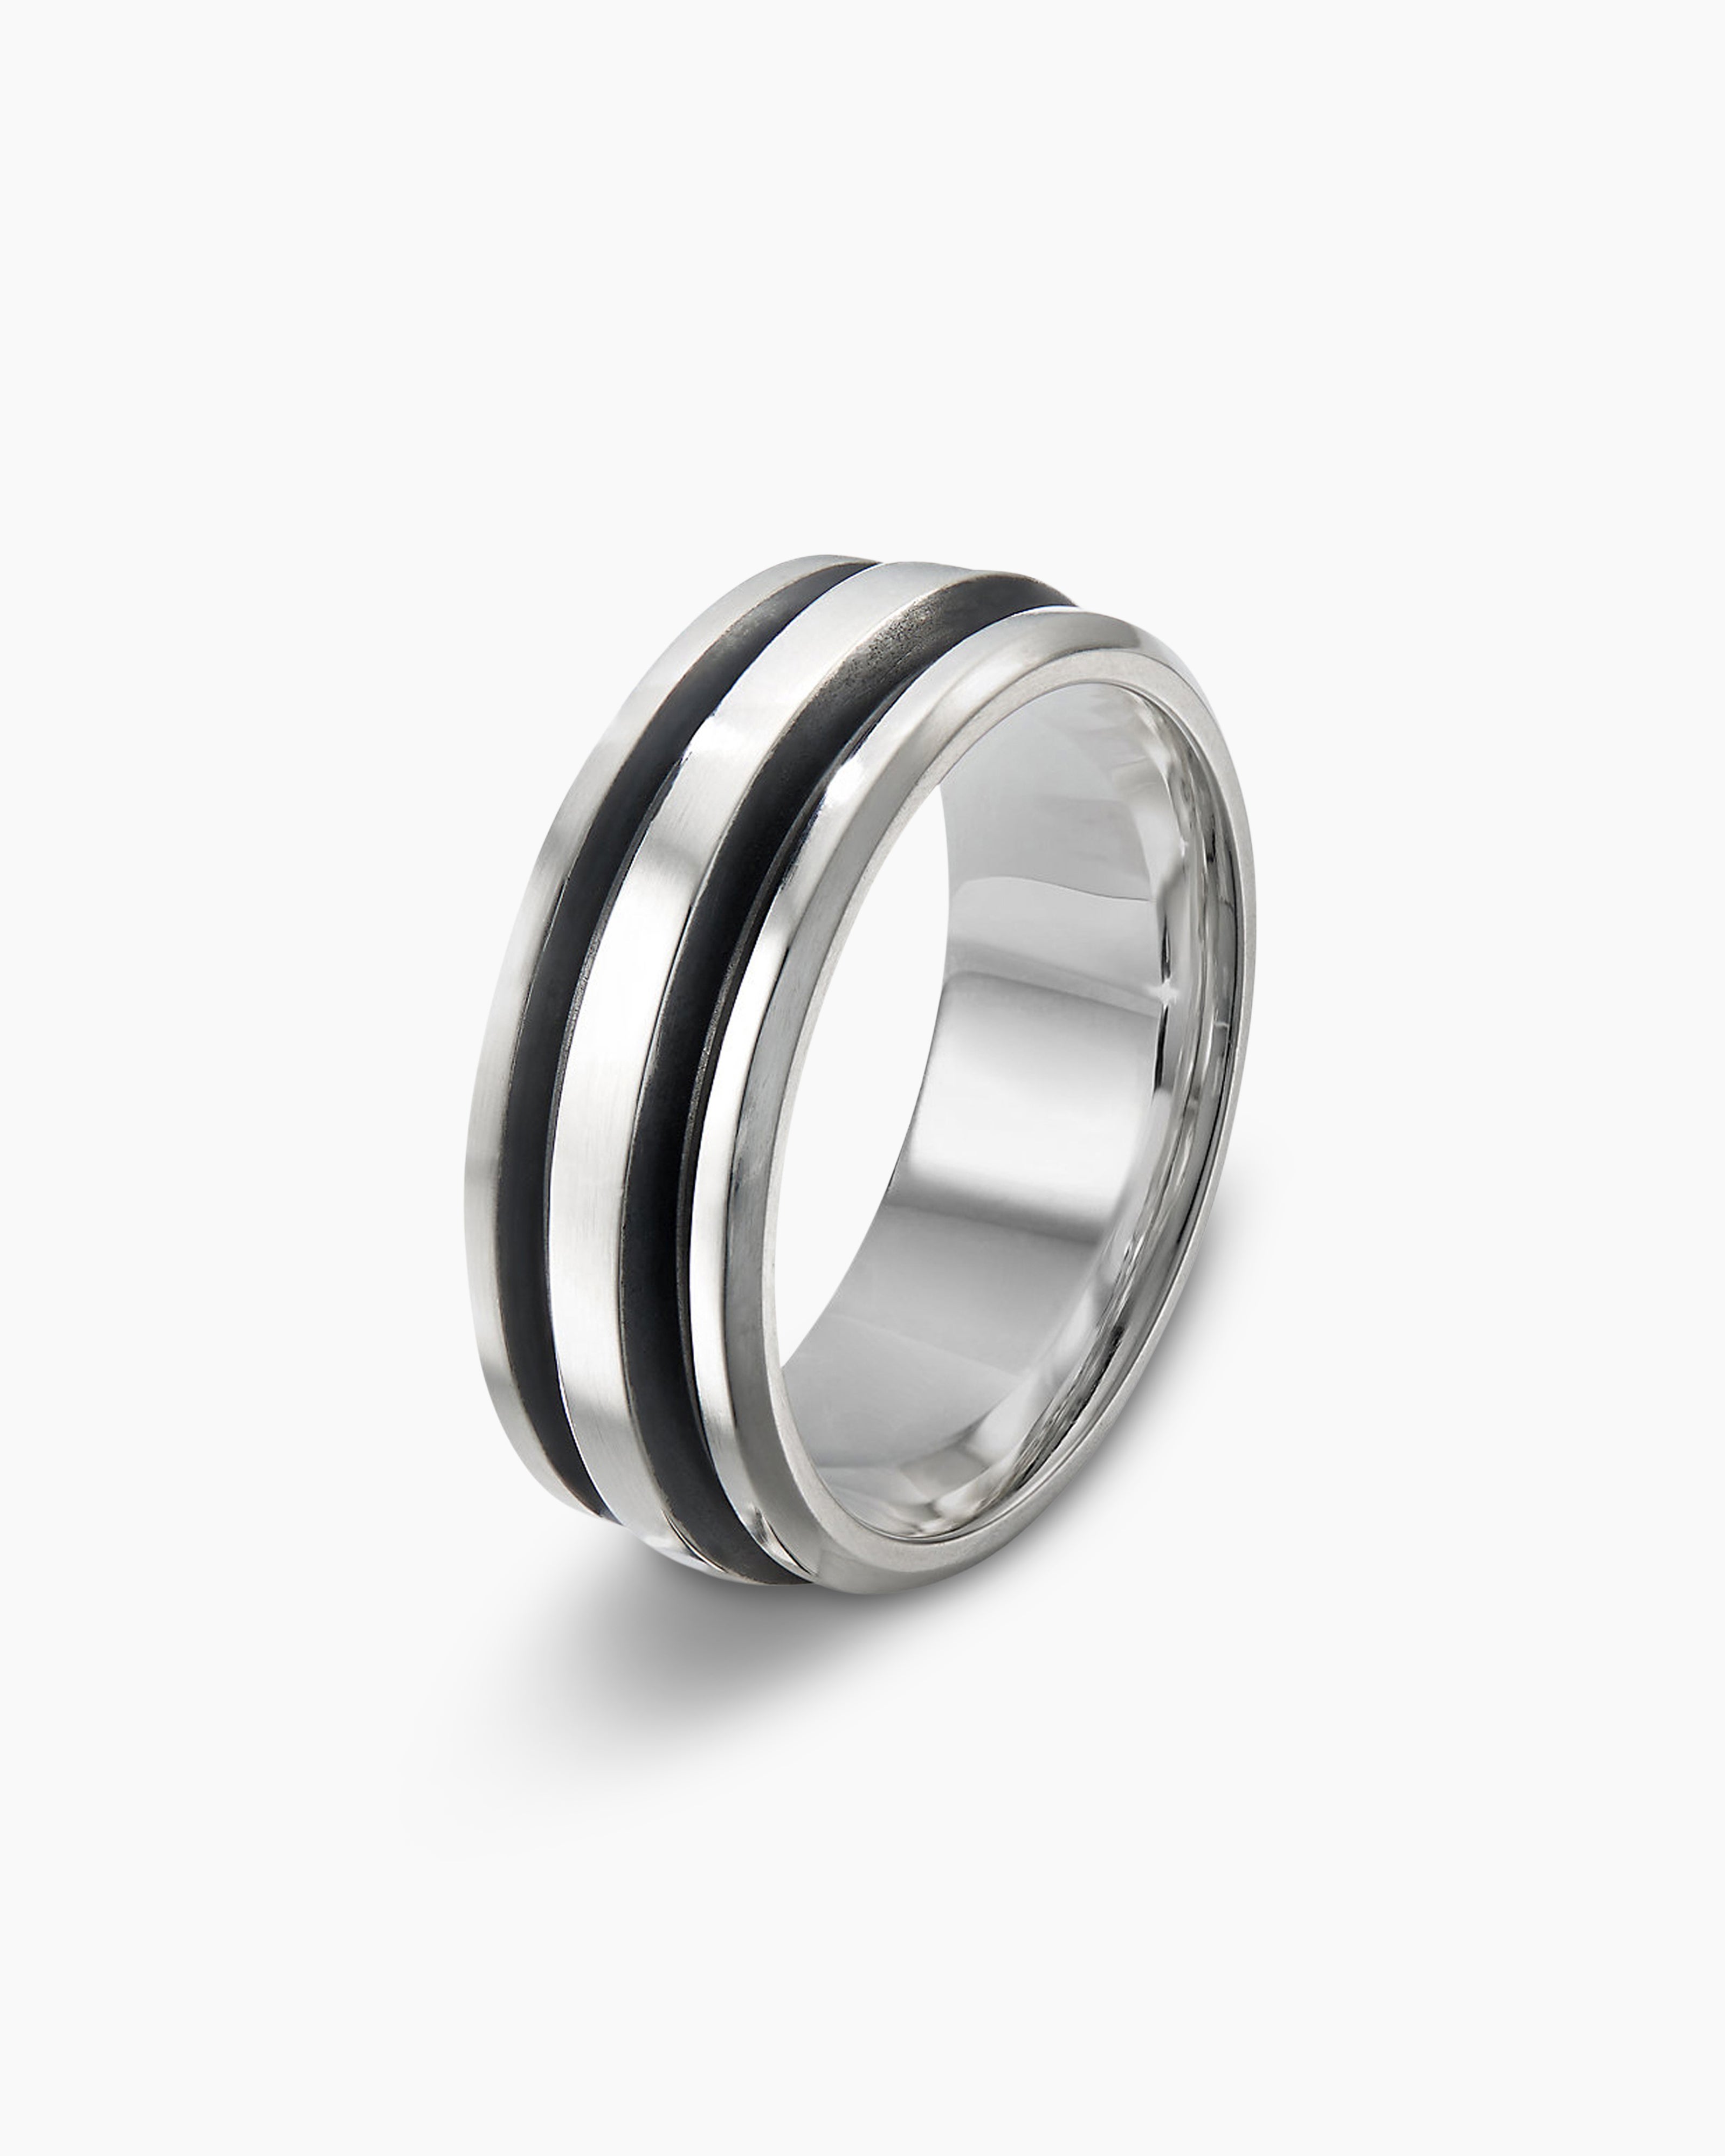 Sterling Silver Ring w/ Vertical Lines 001-620-00156 Houston | Erica  DelGardo Jewelry Designs | Houston, TX